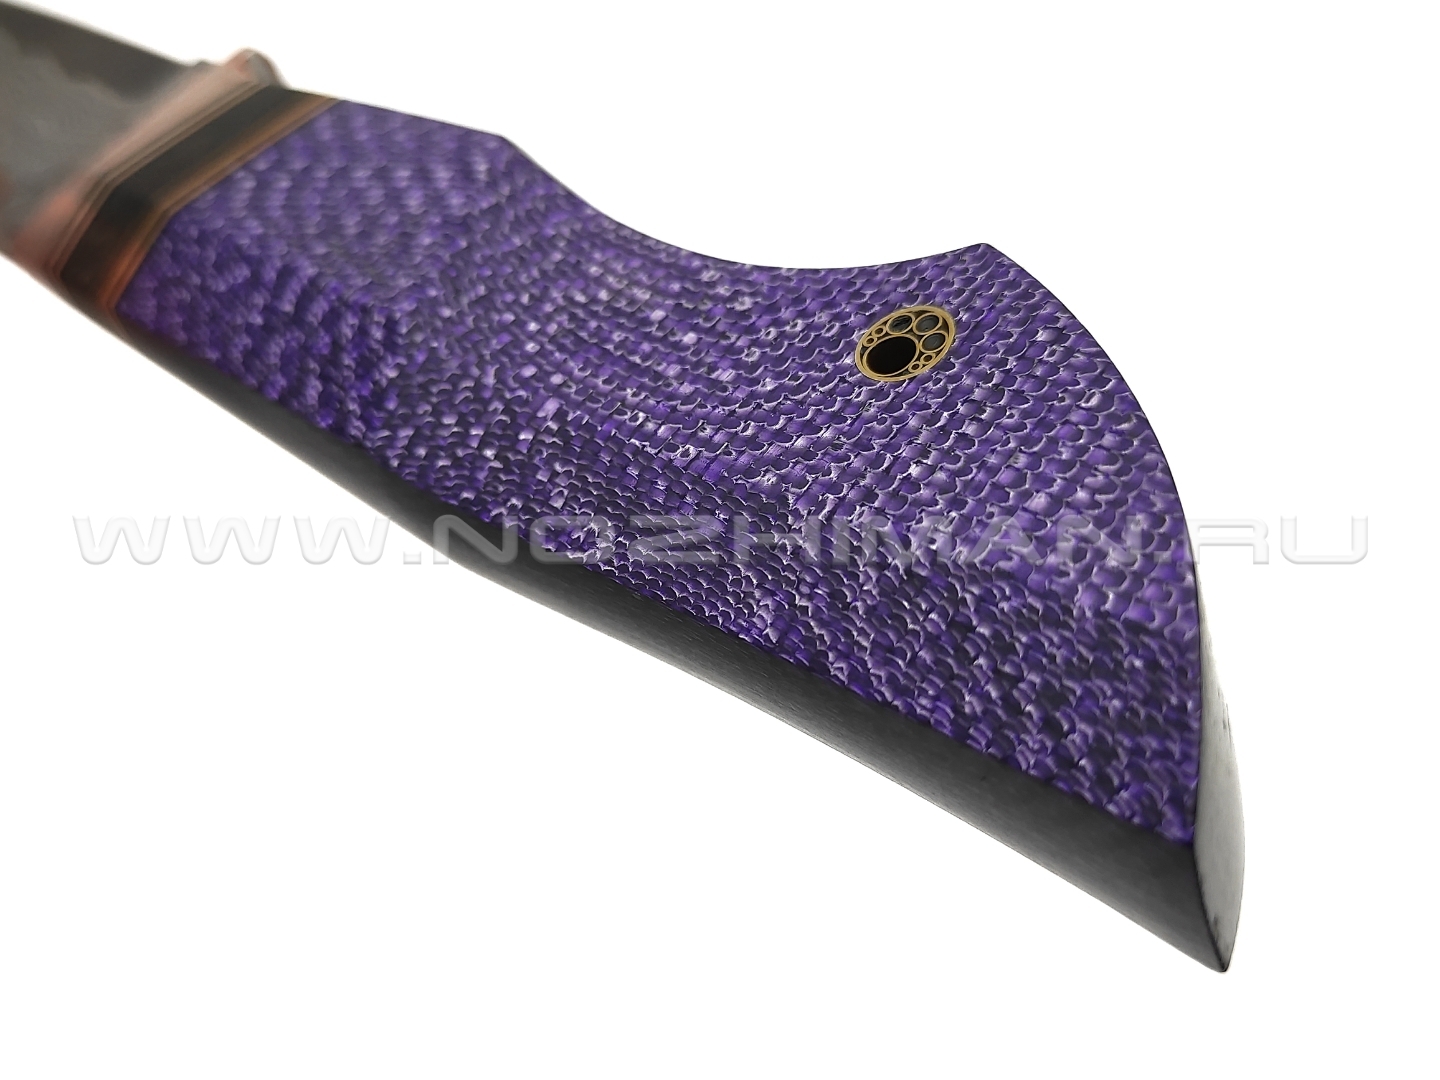 Кузница Васильева нож НЛВ136 ламинат S390, рукоять Silver Twill Purple, мокумэ-ганэ, carbon fiber